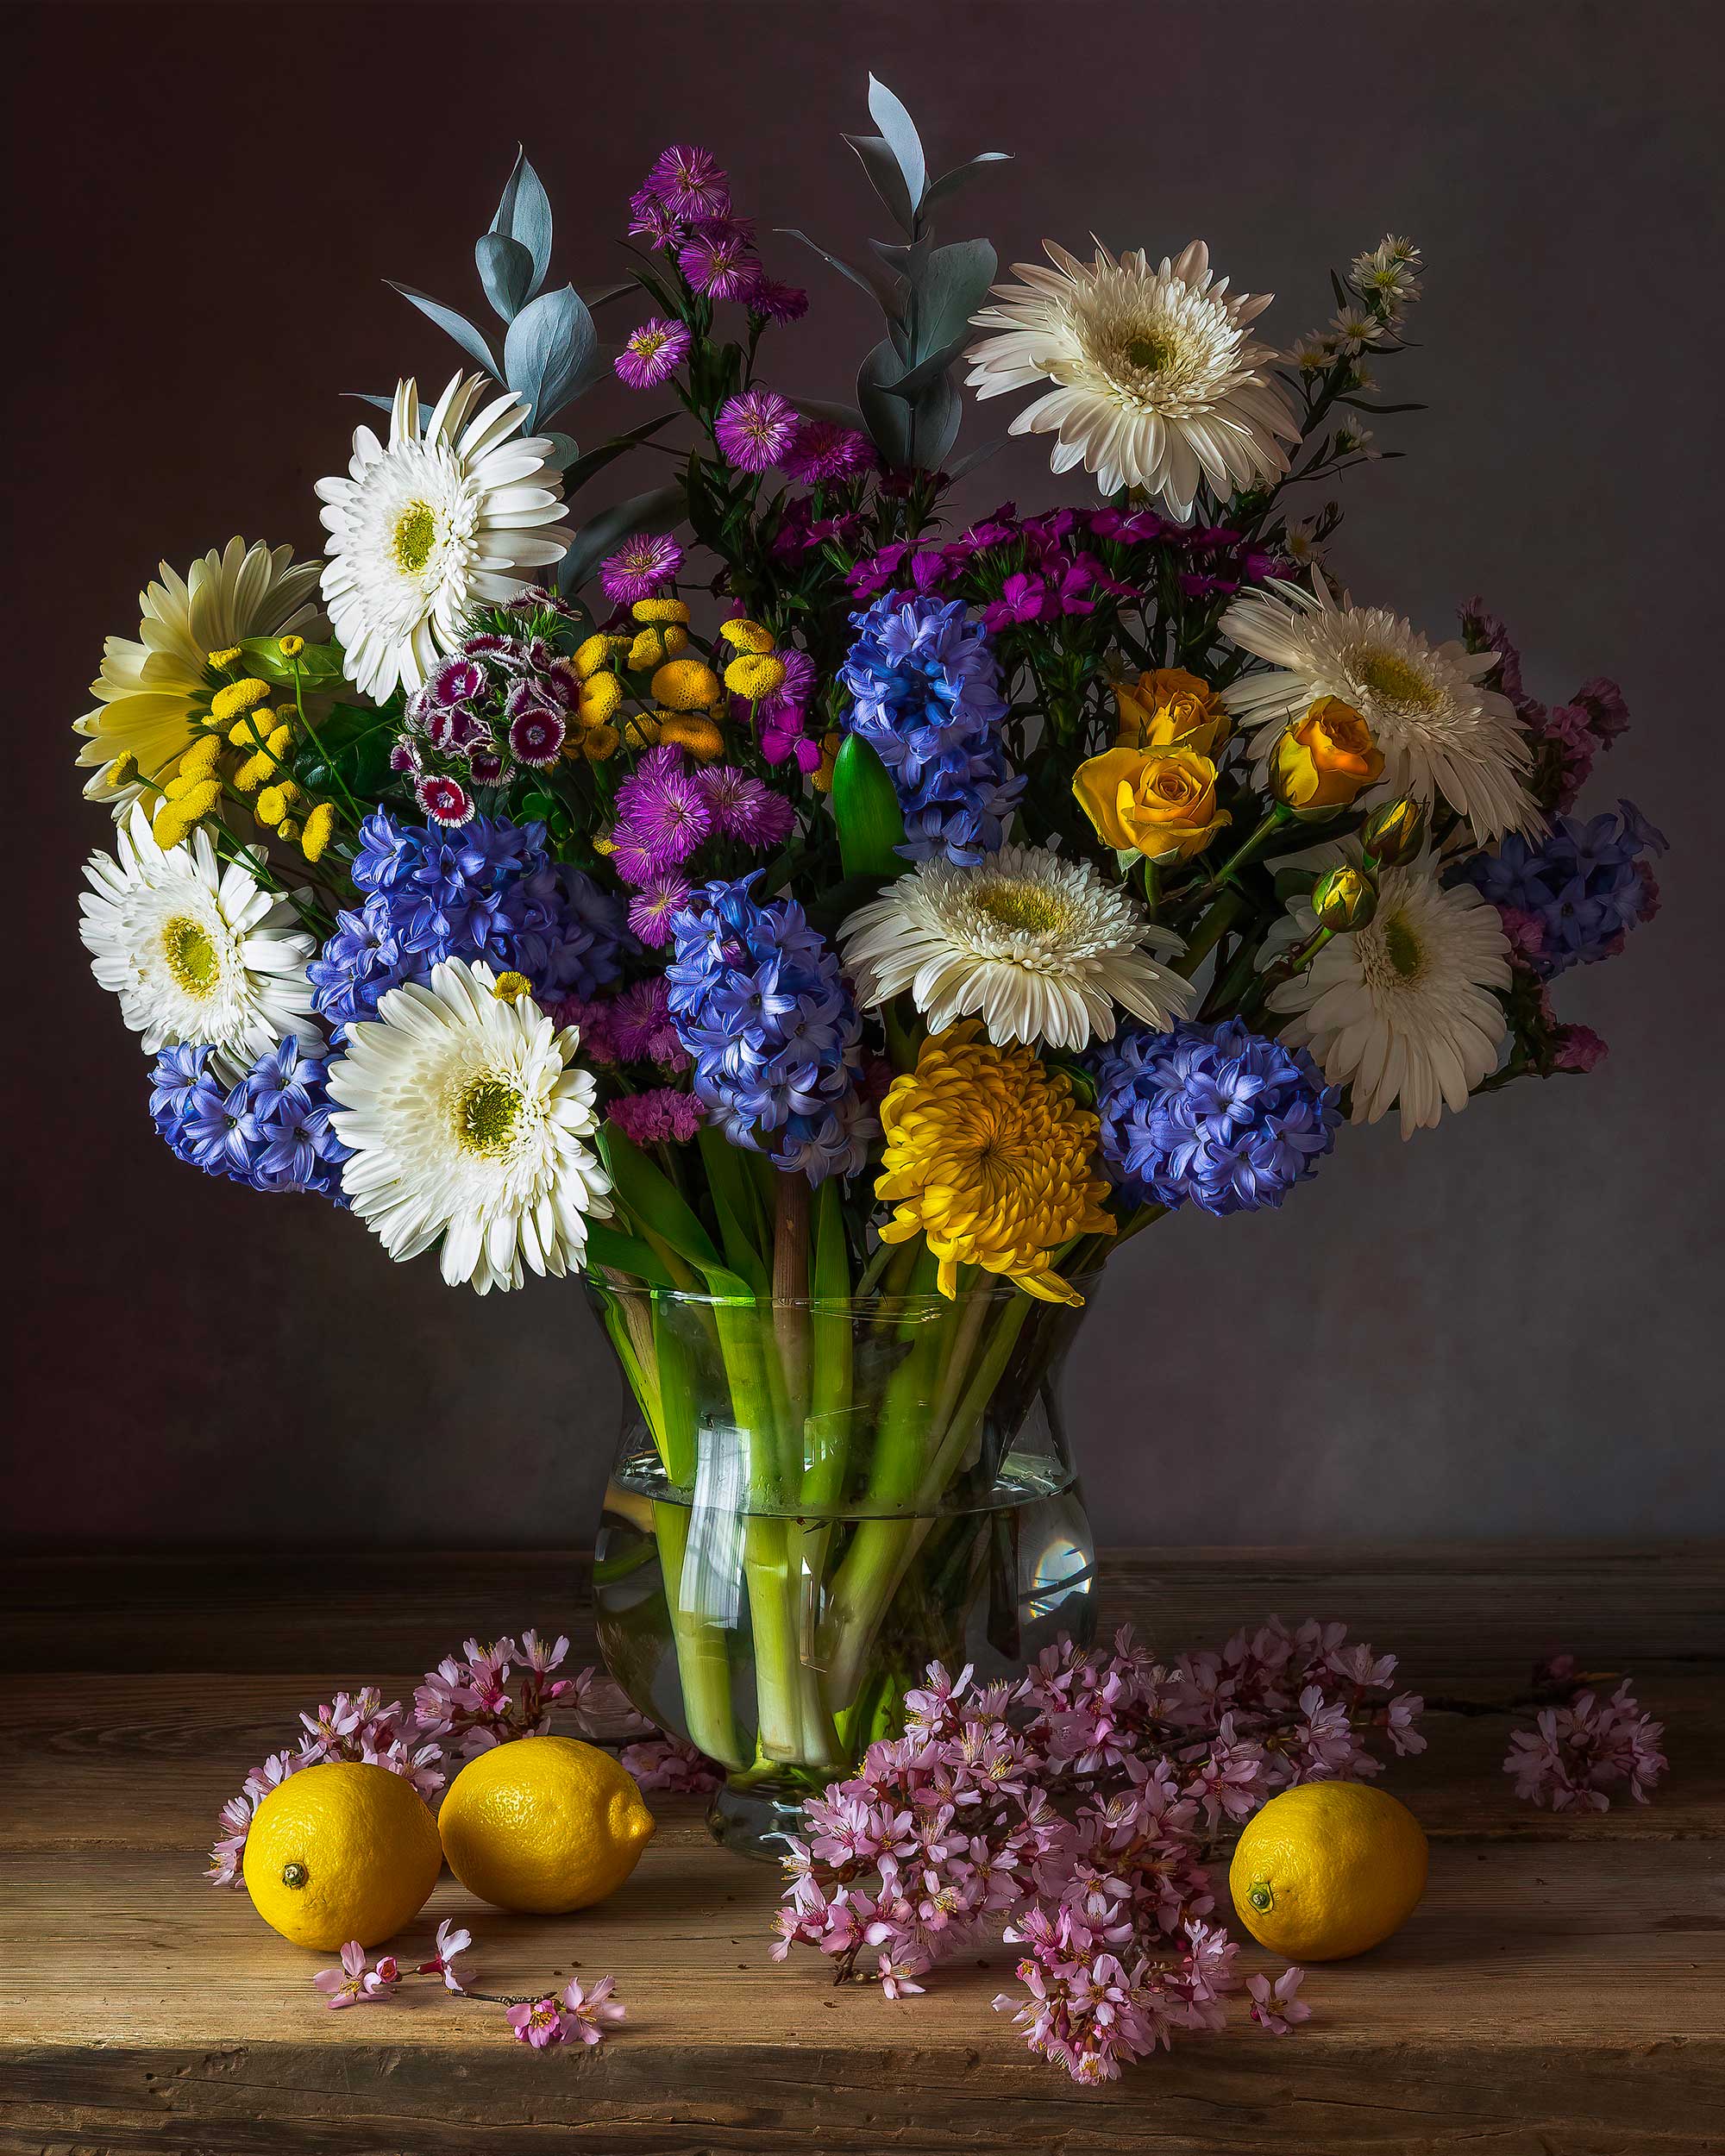 flowers, gerberras, roses, lemons, still life, botanical art, photography, spring flowers, Слуцкая Яна